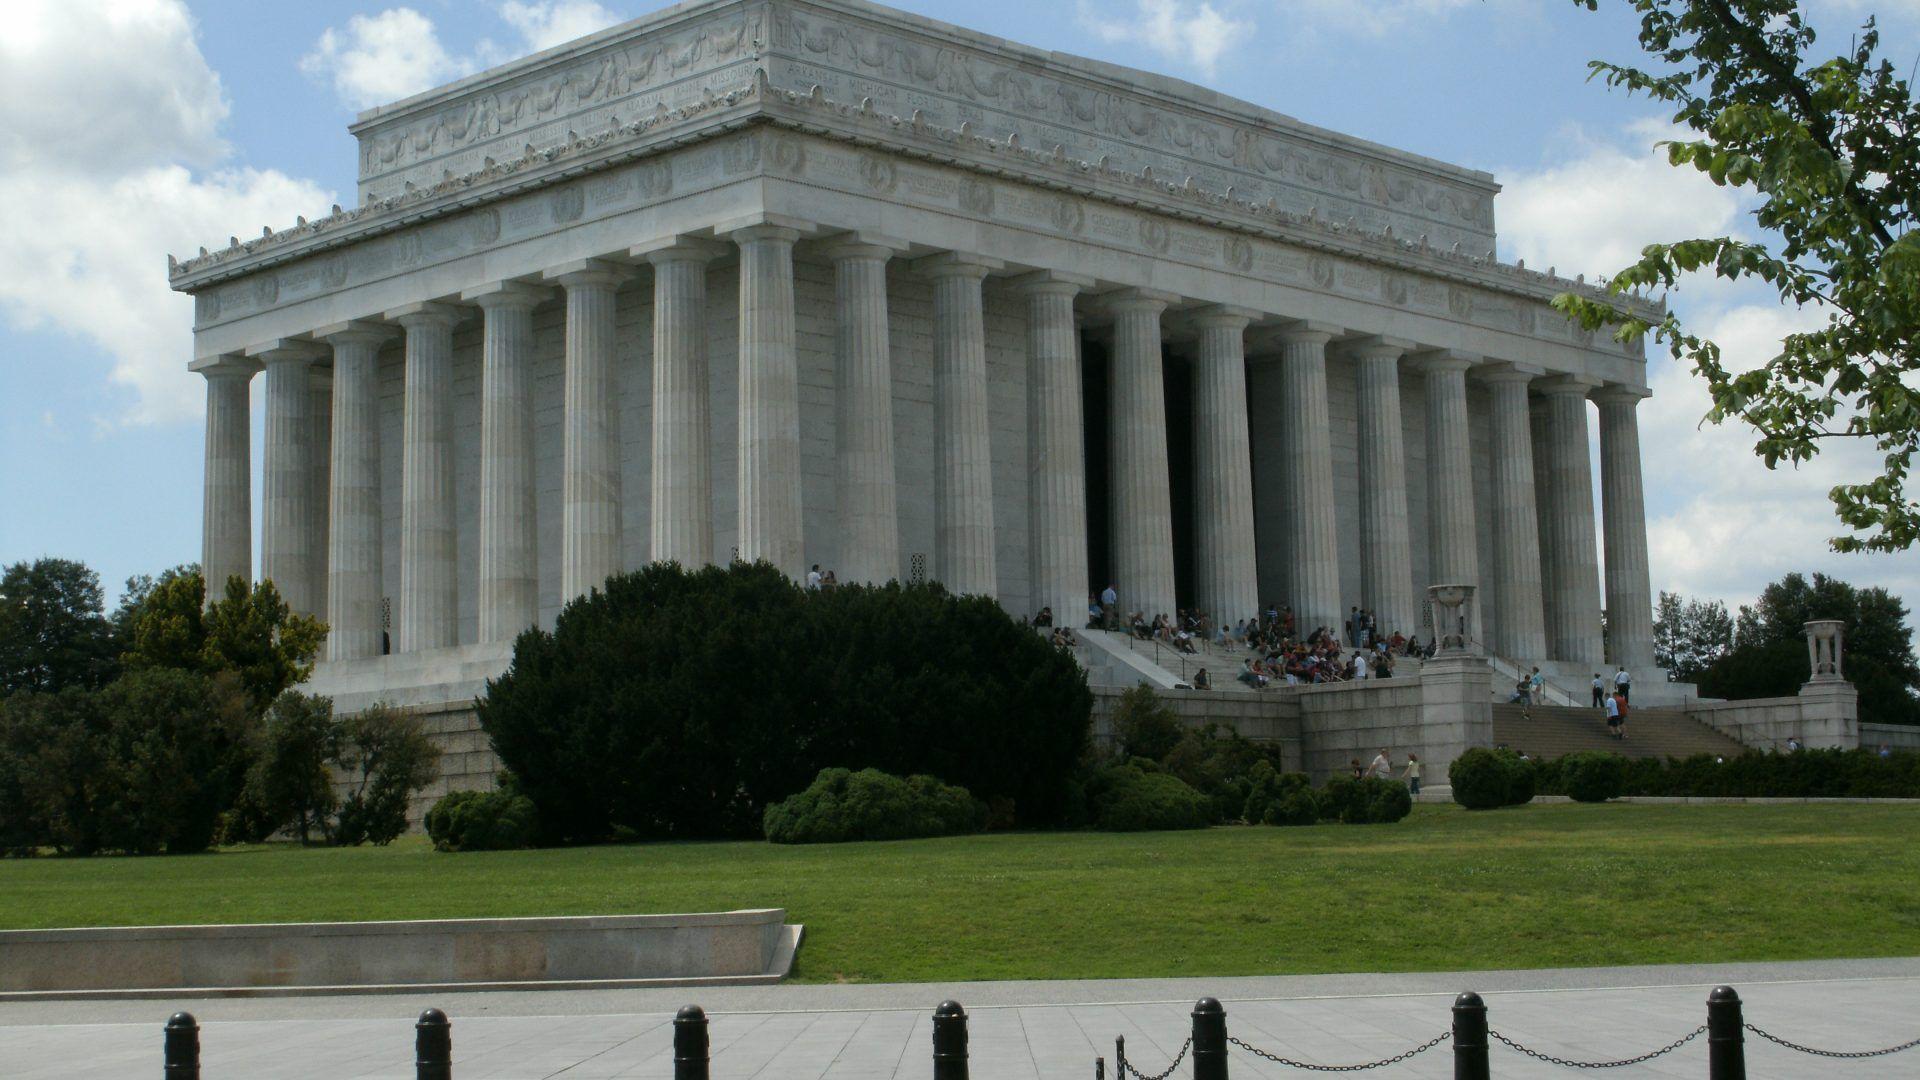 Lincoln Tag wallpaper: Untitled Oln Memorial Washington DC